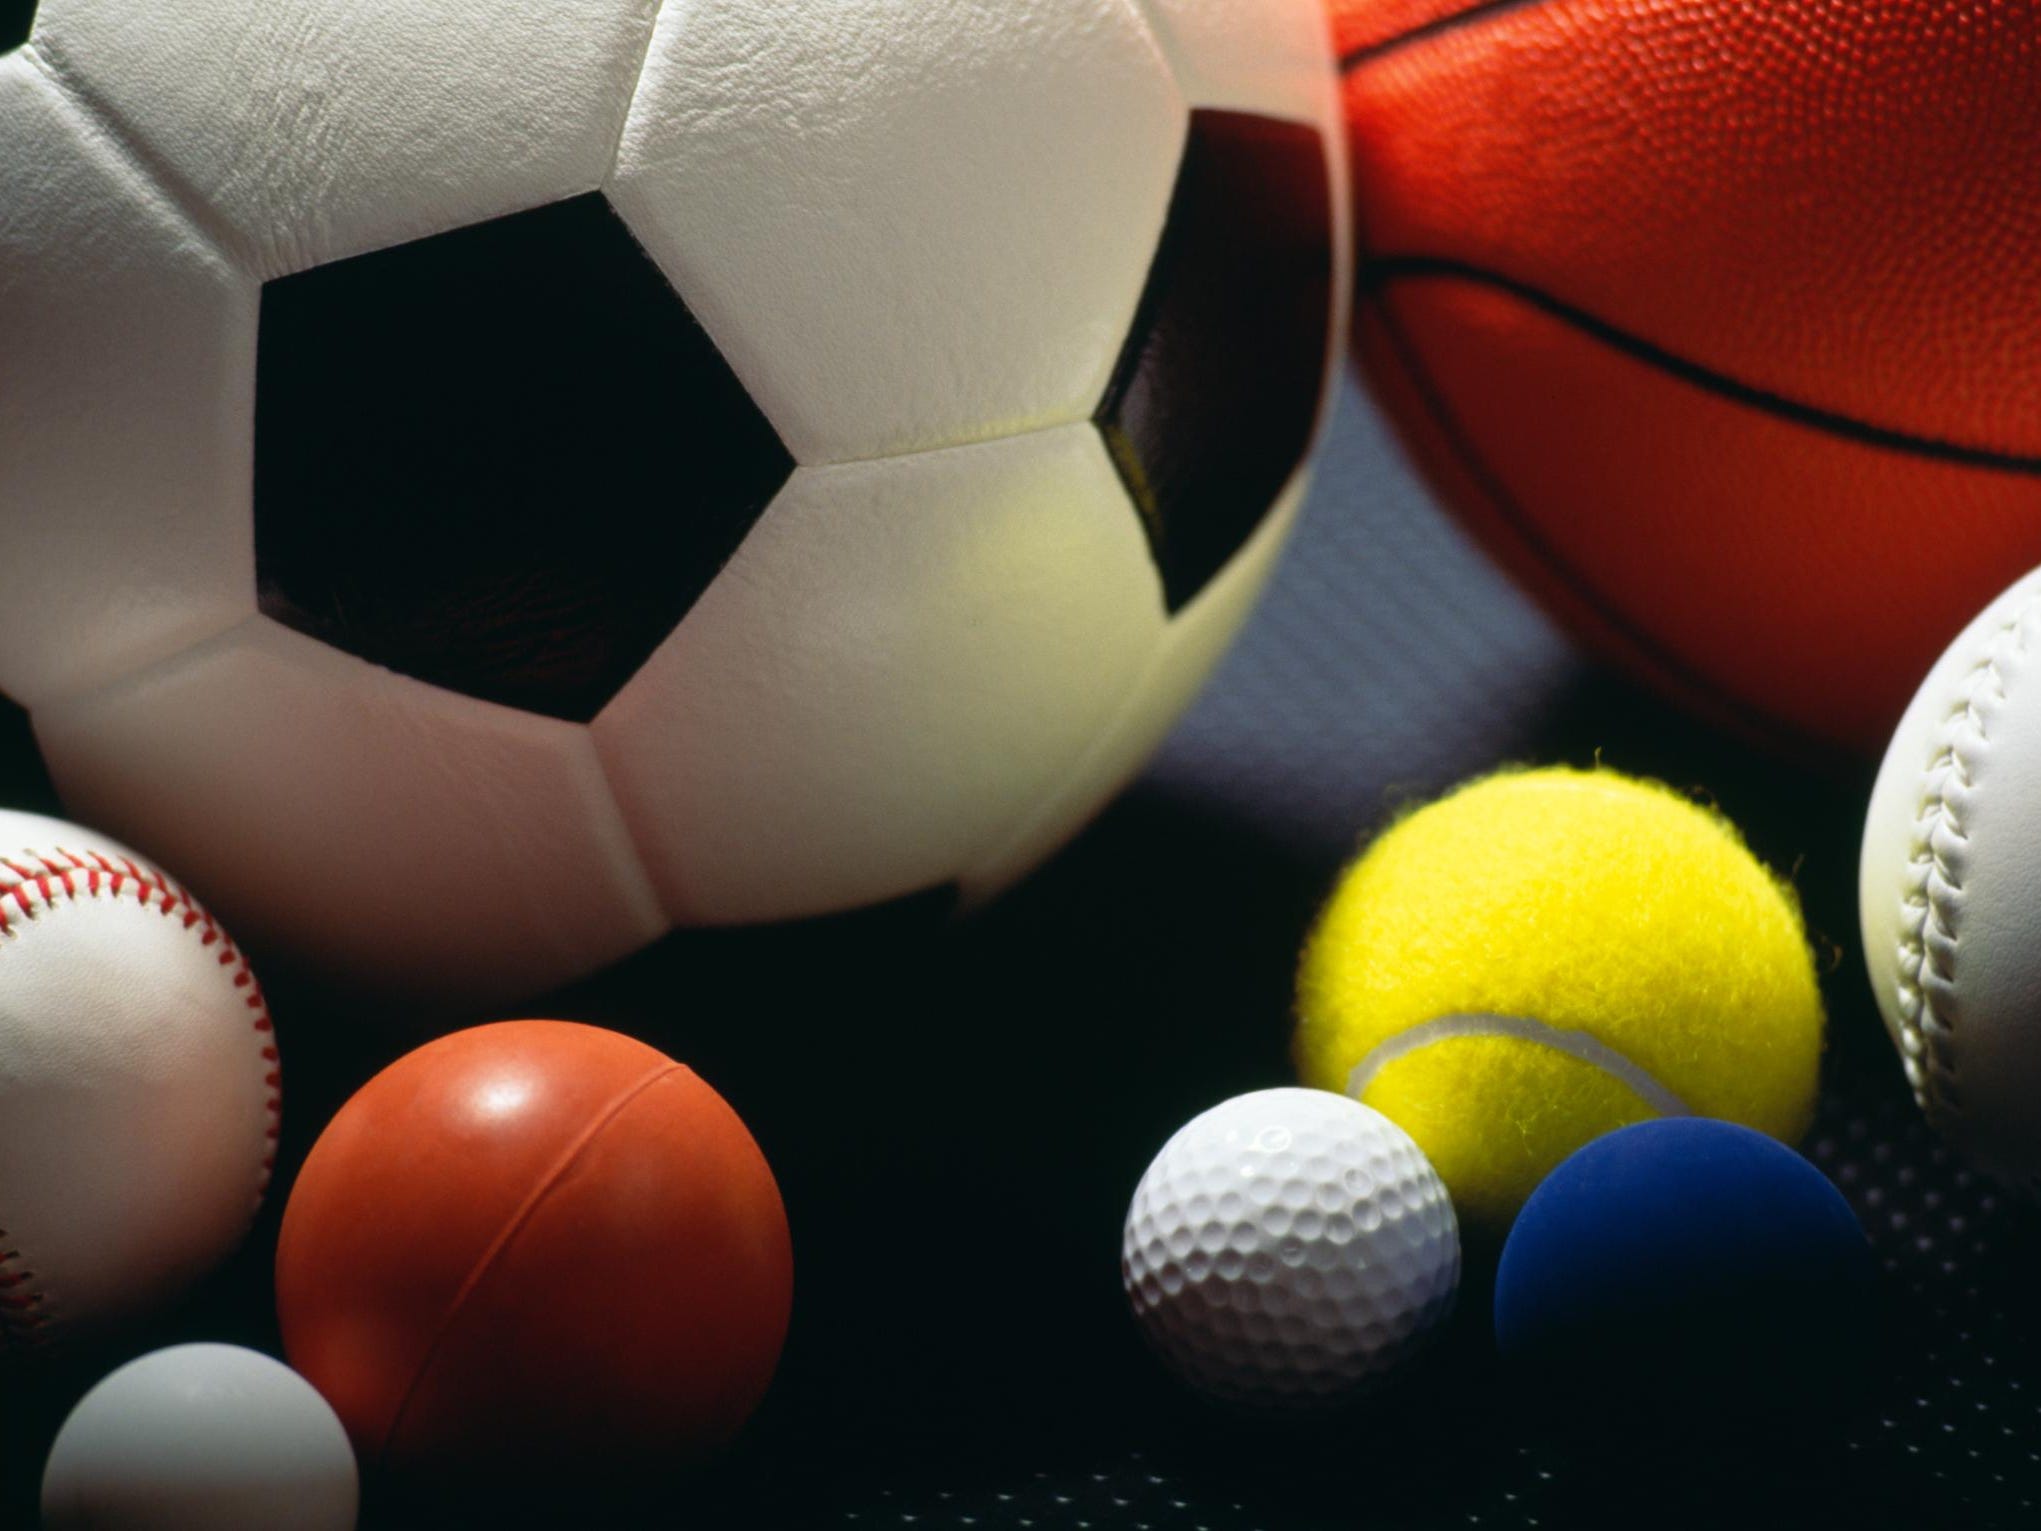 Balls representing various sports